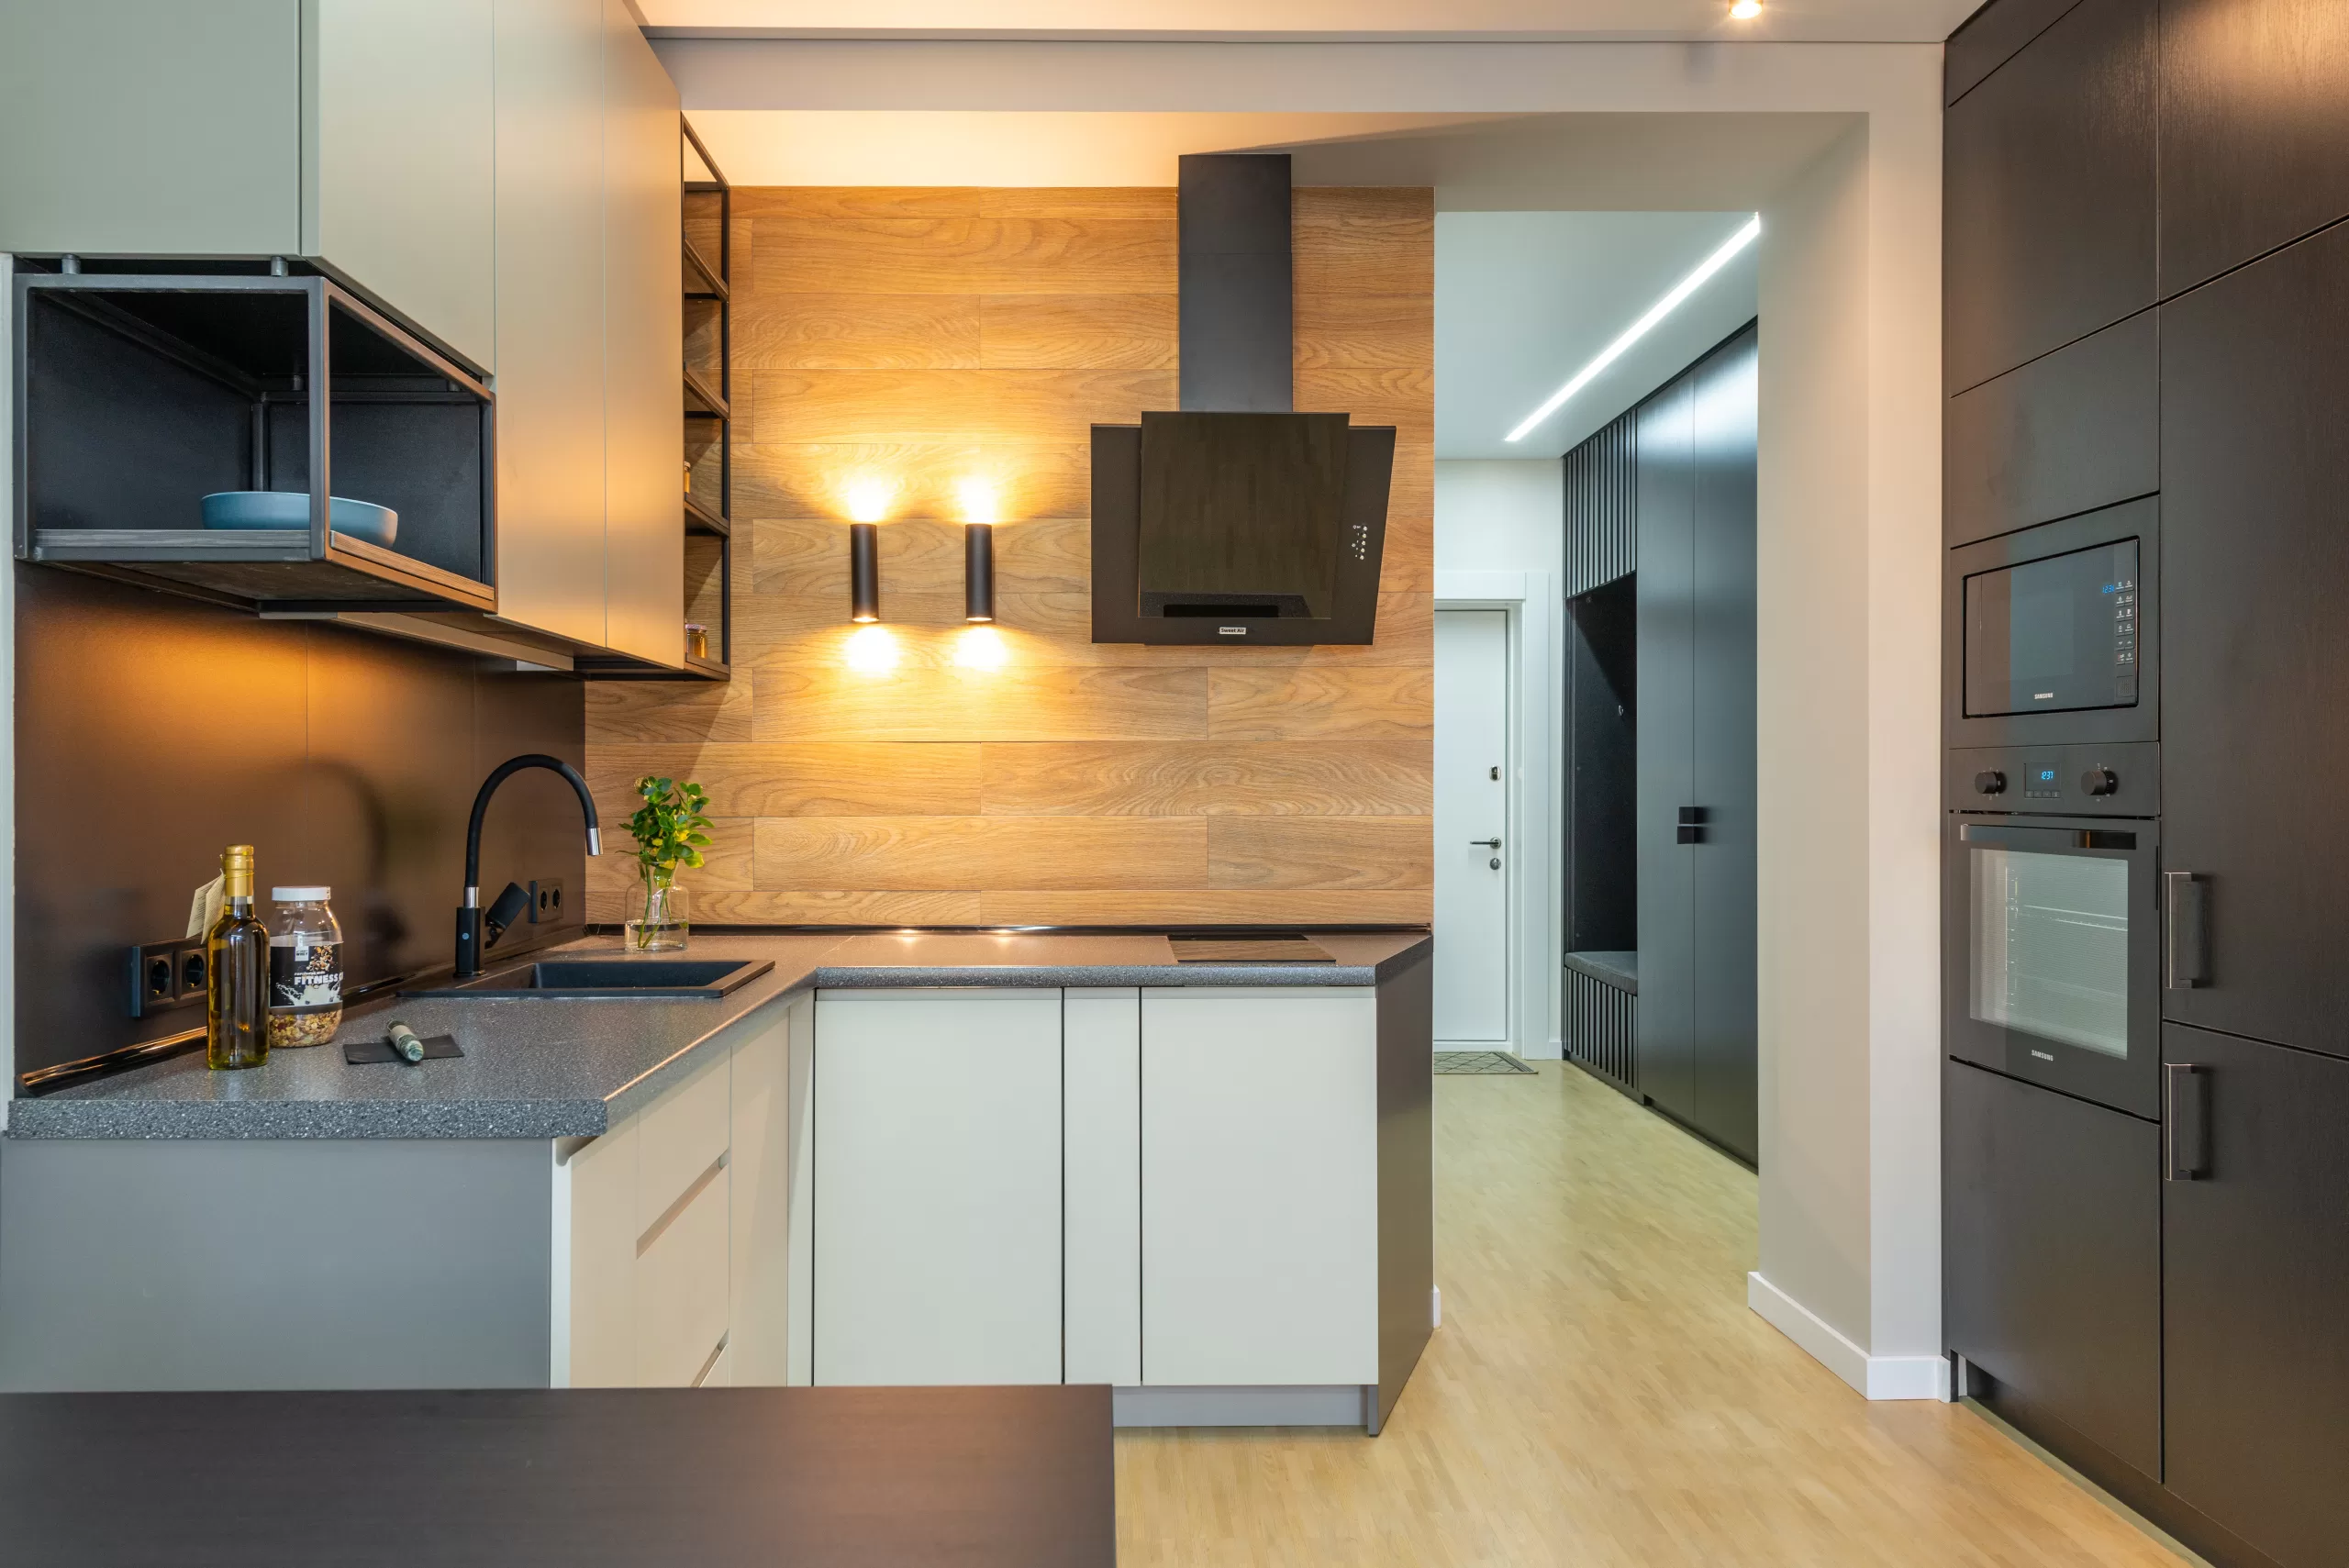 Frameless Kitchen Cabinets - Installation, Benefits & Maintenance